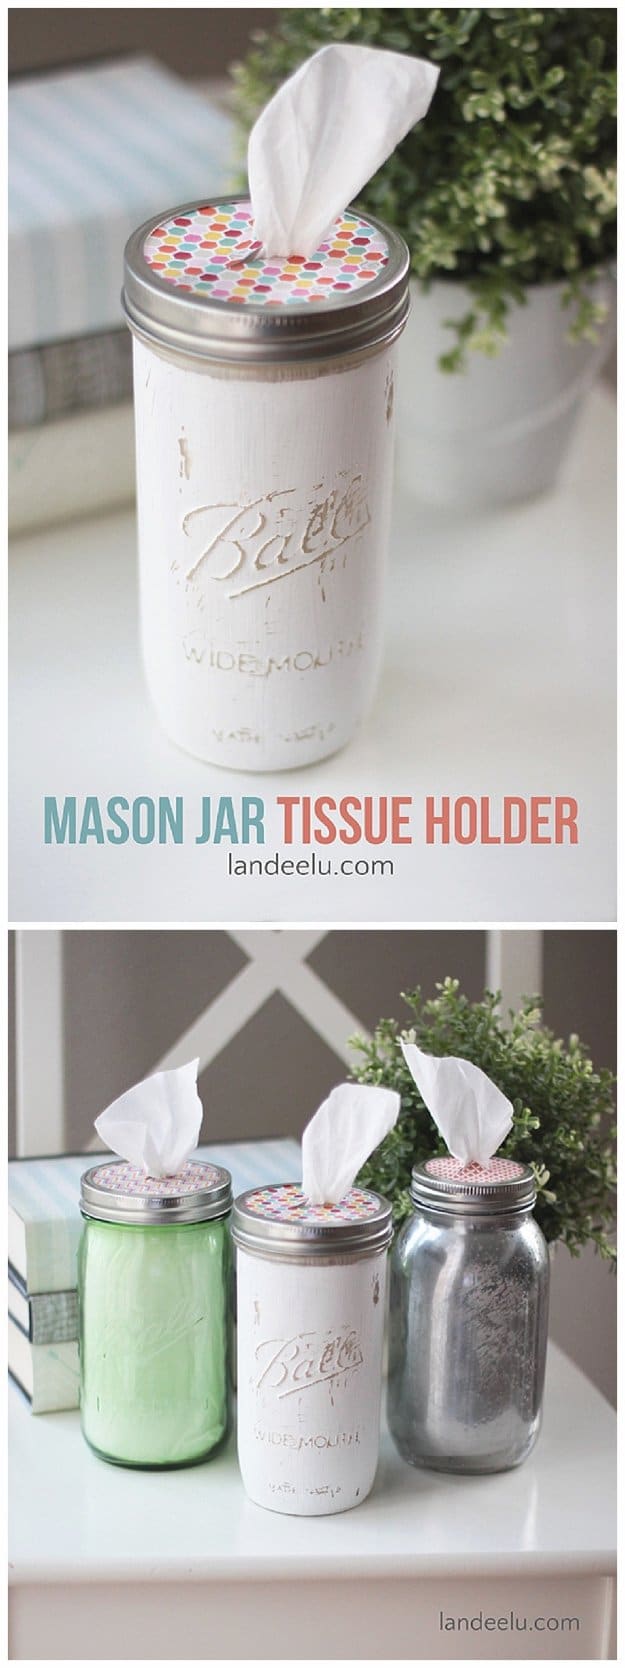 DIY Bathroom Decor Ideas - Mason Jar Tissue Holder - Cool Do It Yourself Bath Ideas on A Budget, Rustic Bathroom Fixtures, Creative Wall Art, Rugs mason jar idea bath diy